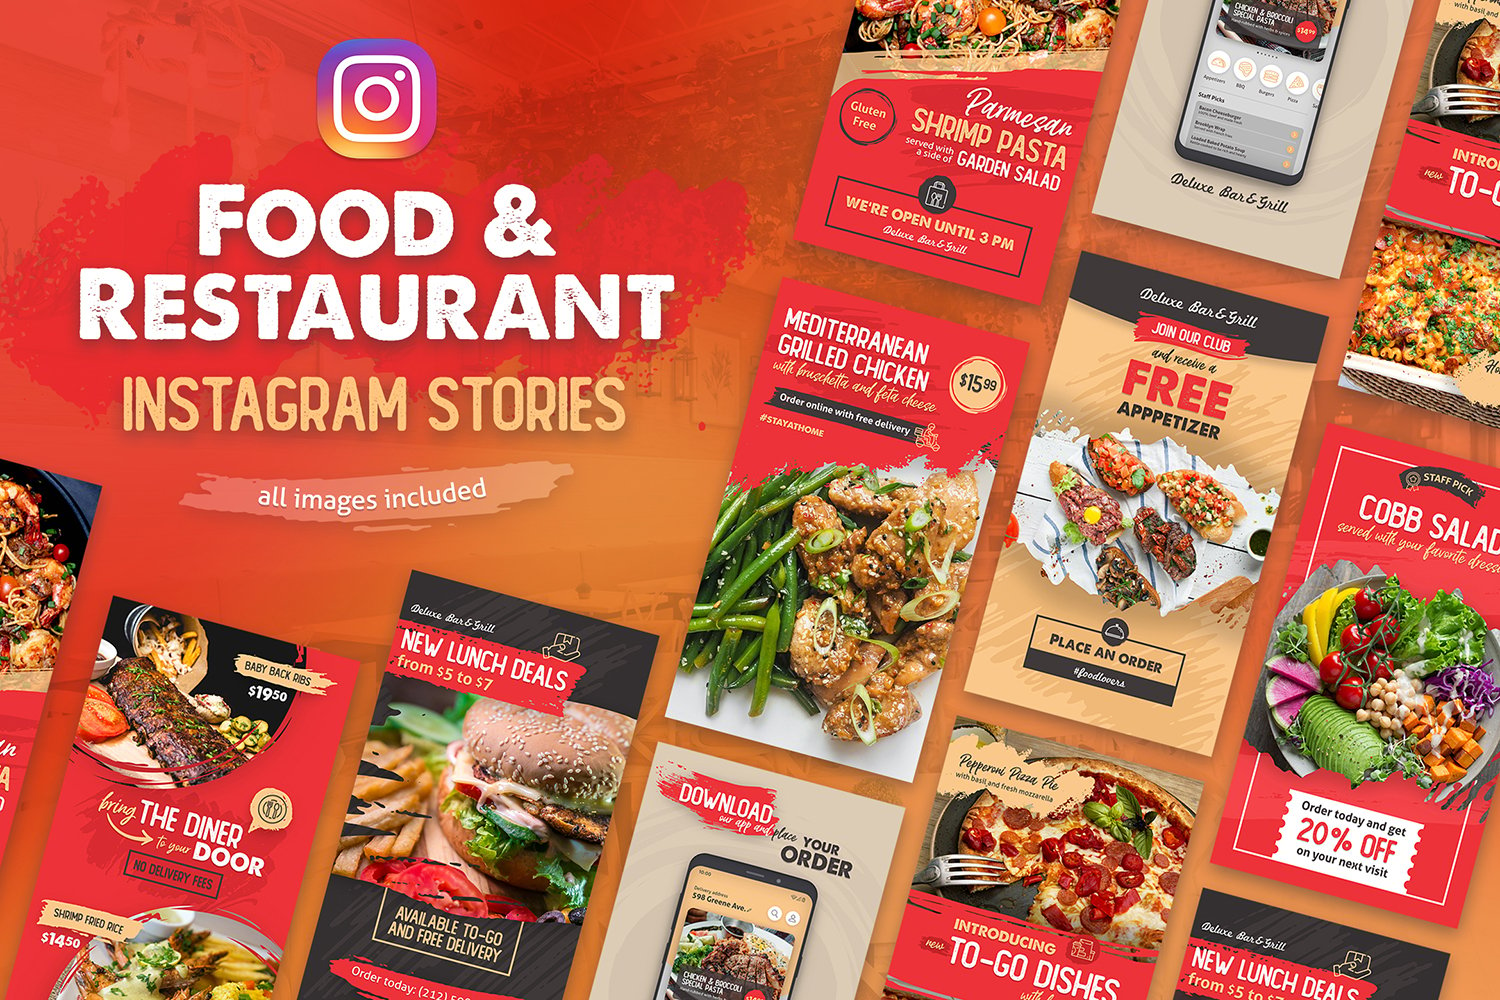 Food and Restaurant Instagram Stories